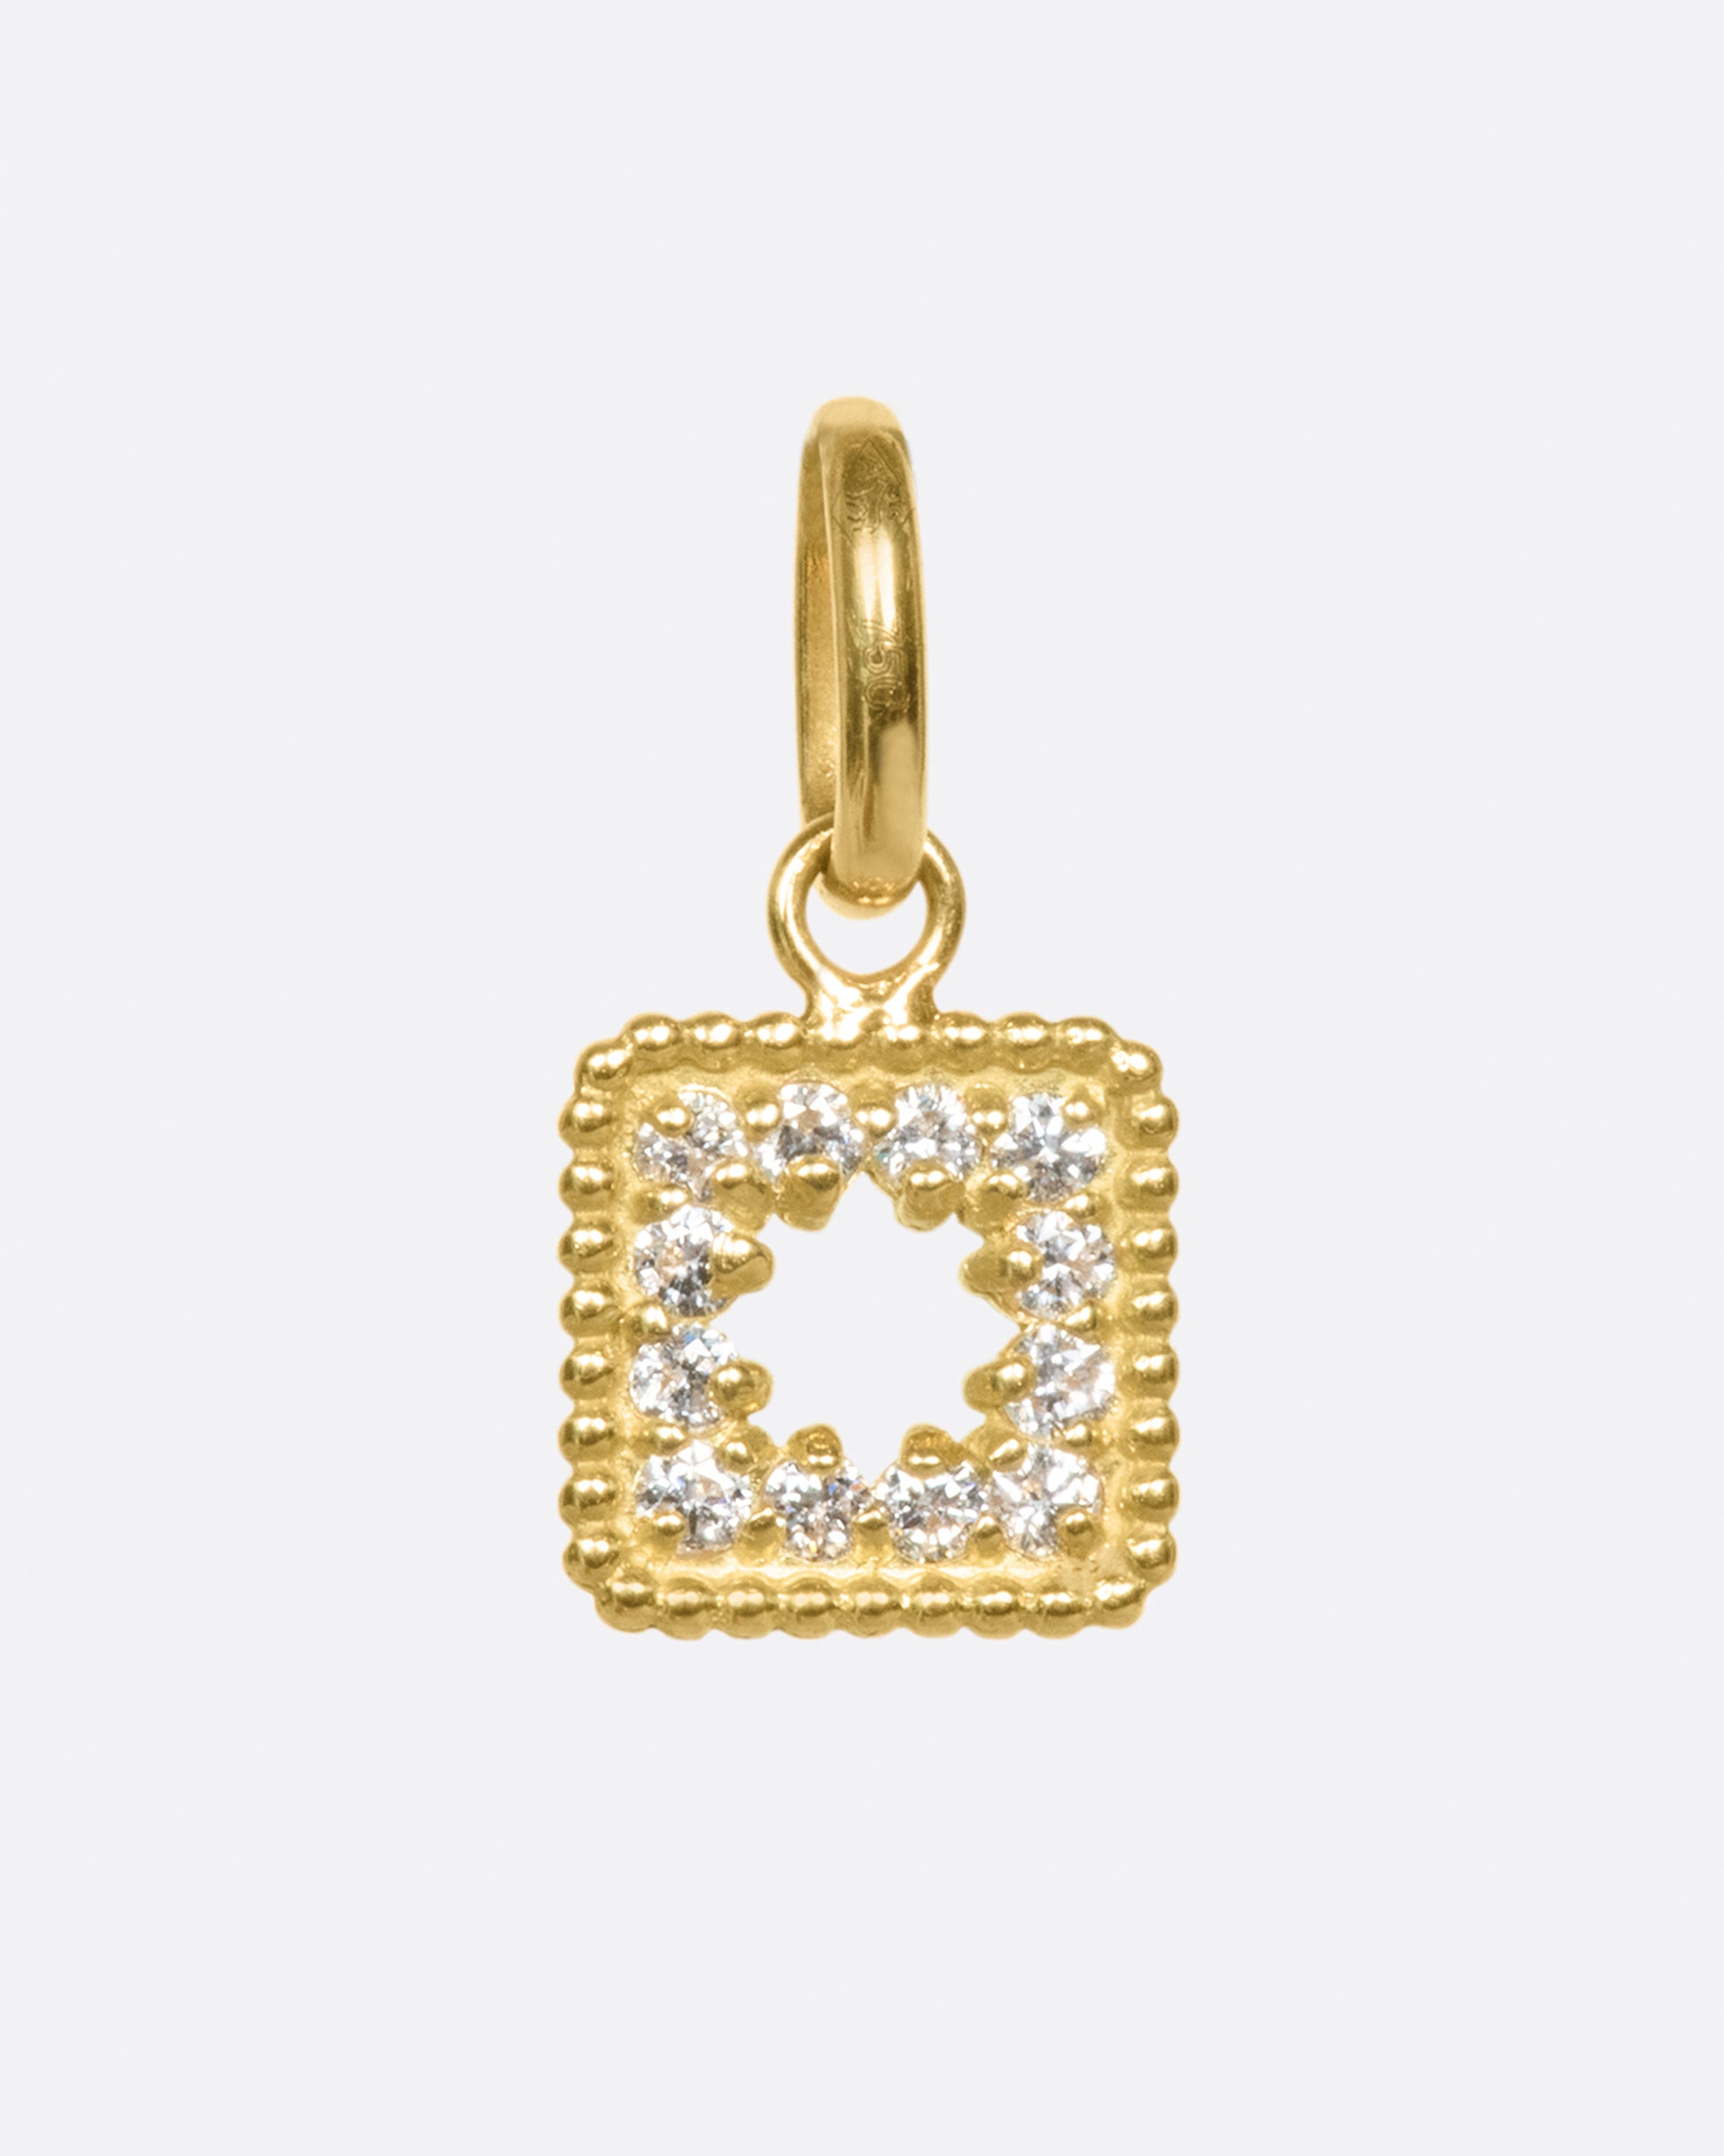 A little window pendant lined with twelve diamonds.